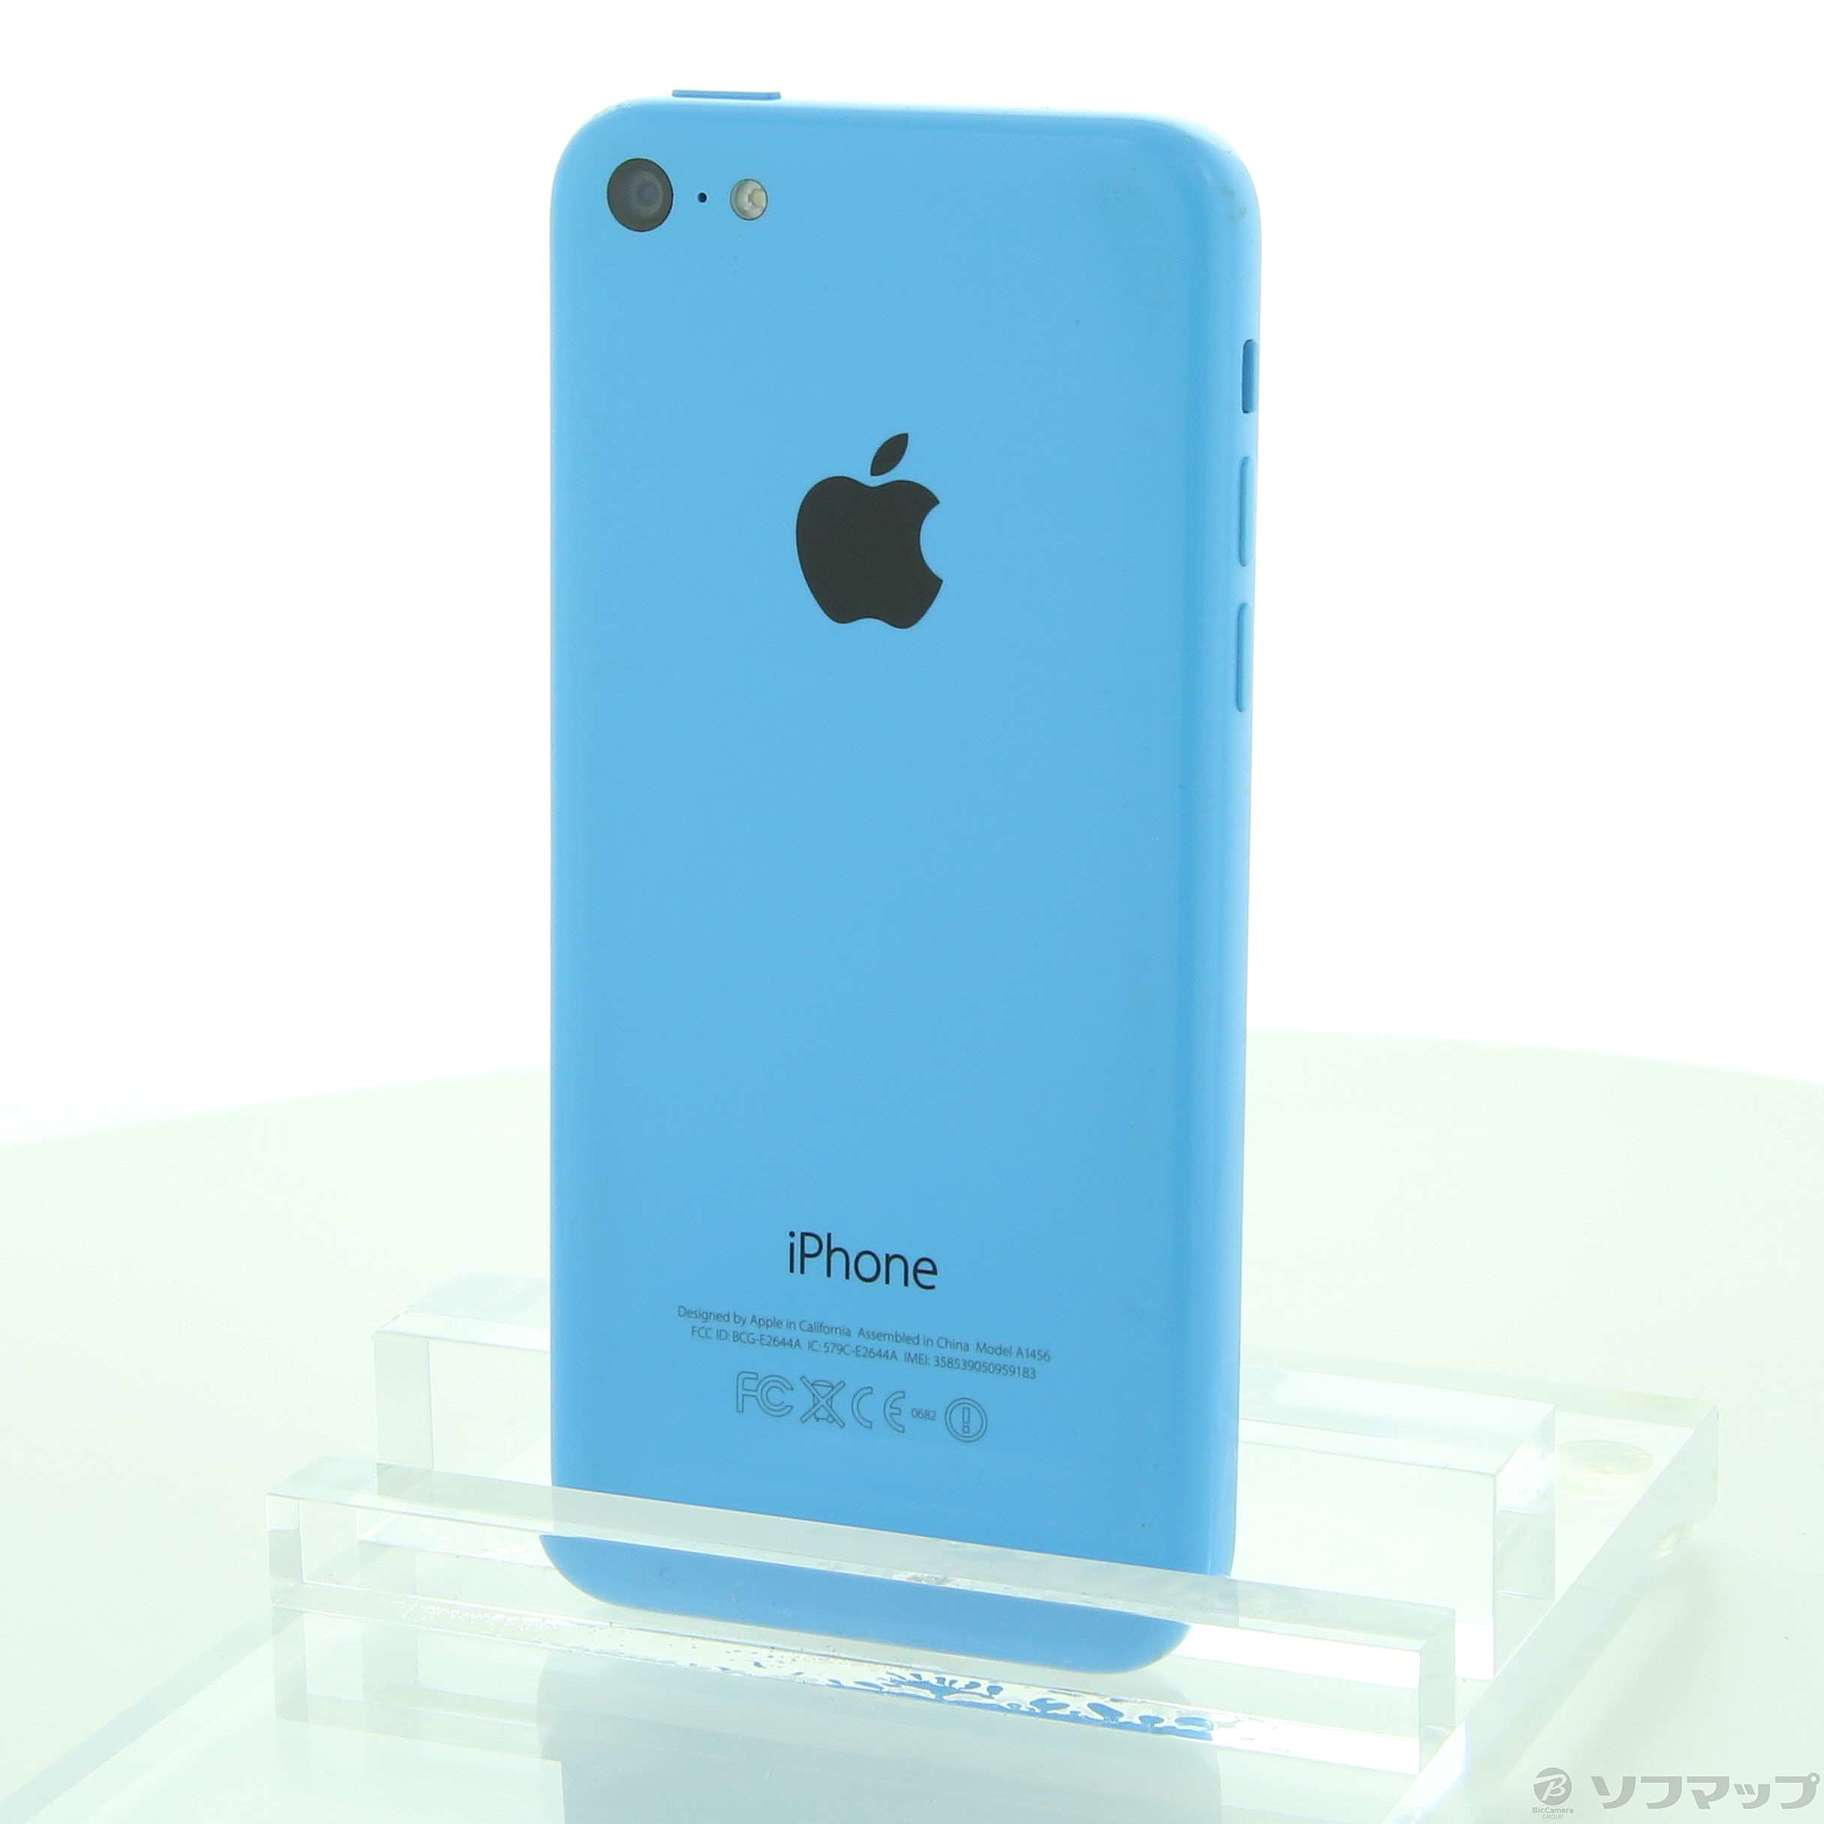 iPhone 5c Blue 16 GB Softbank - 携帯電話